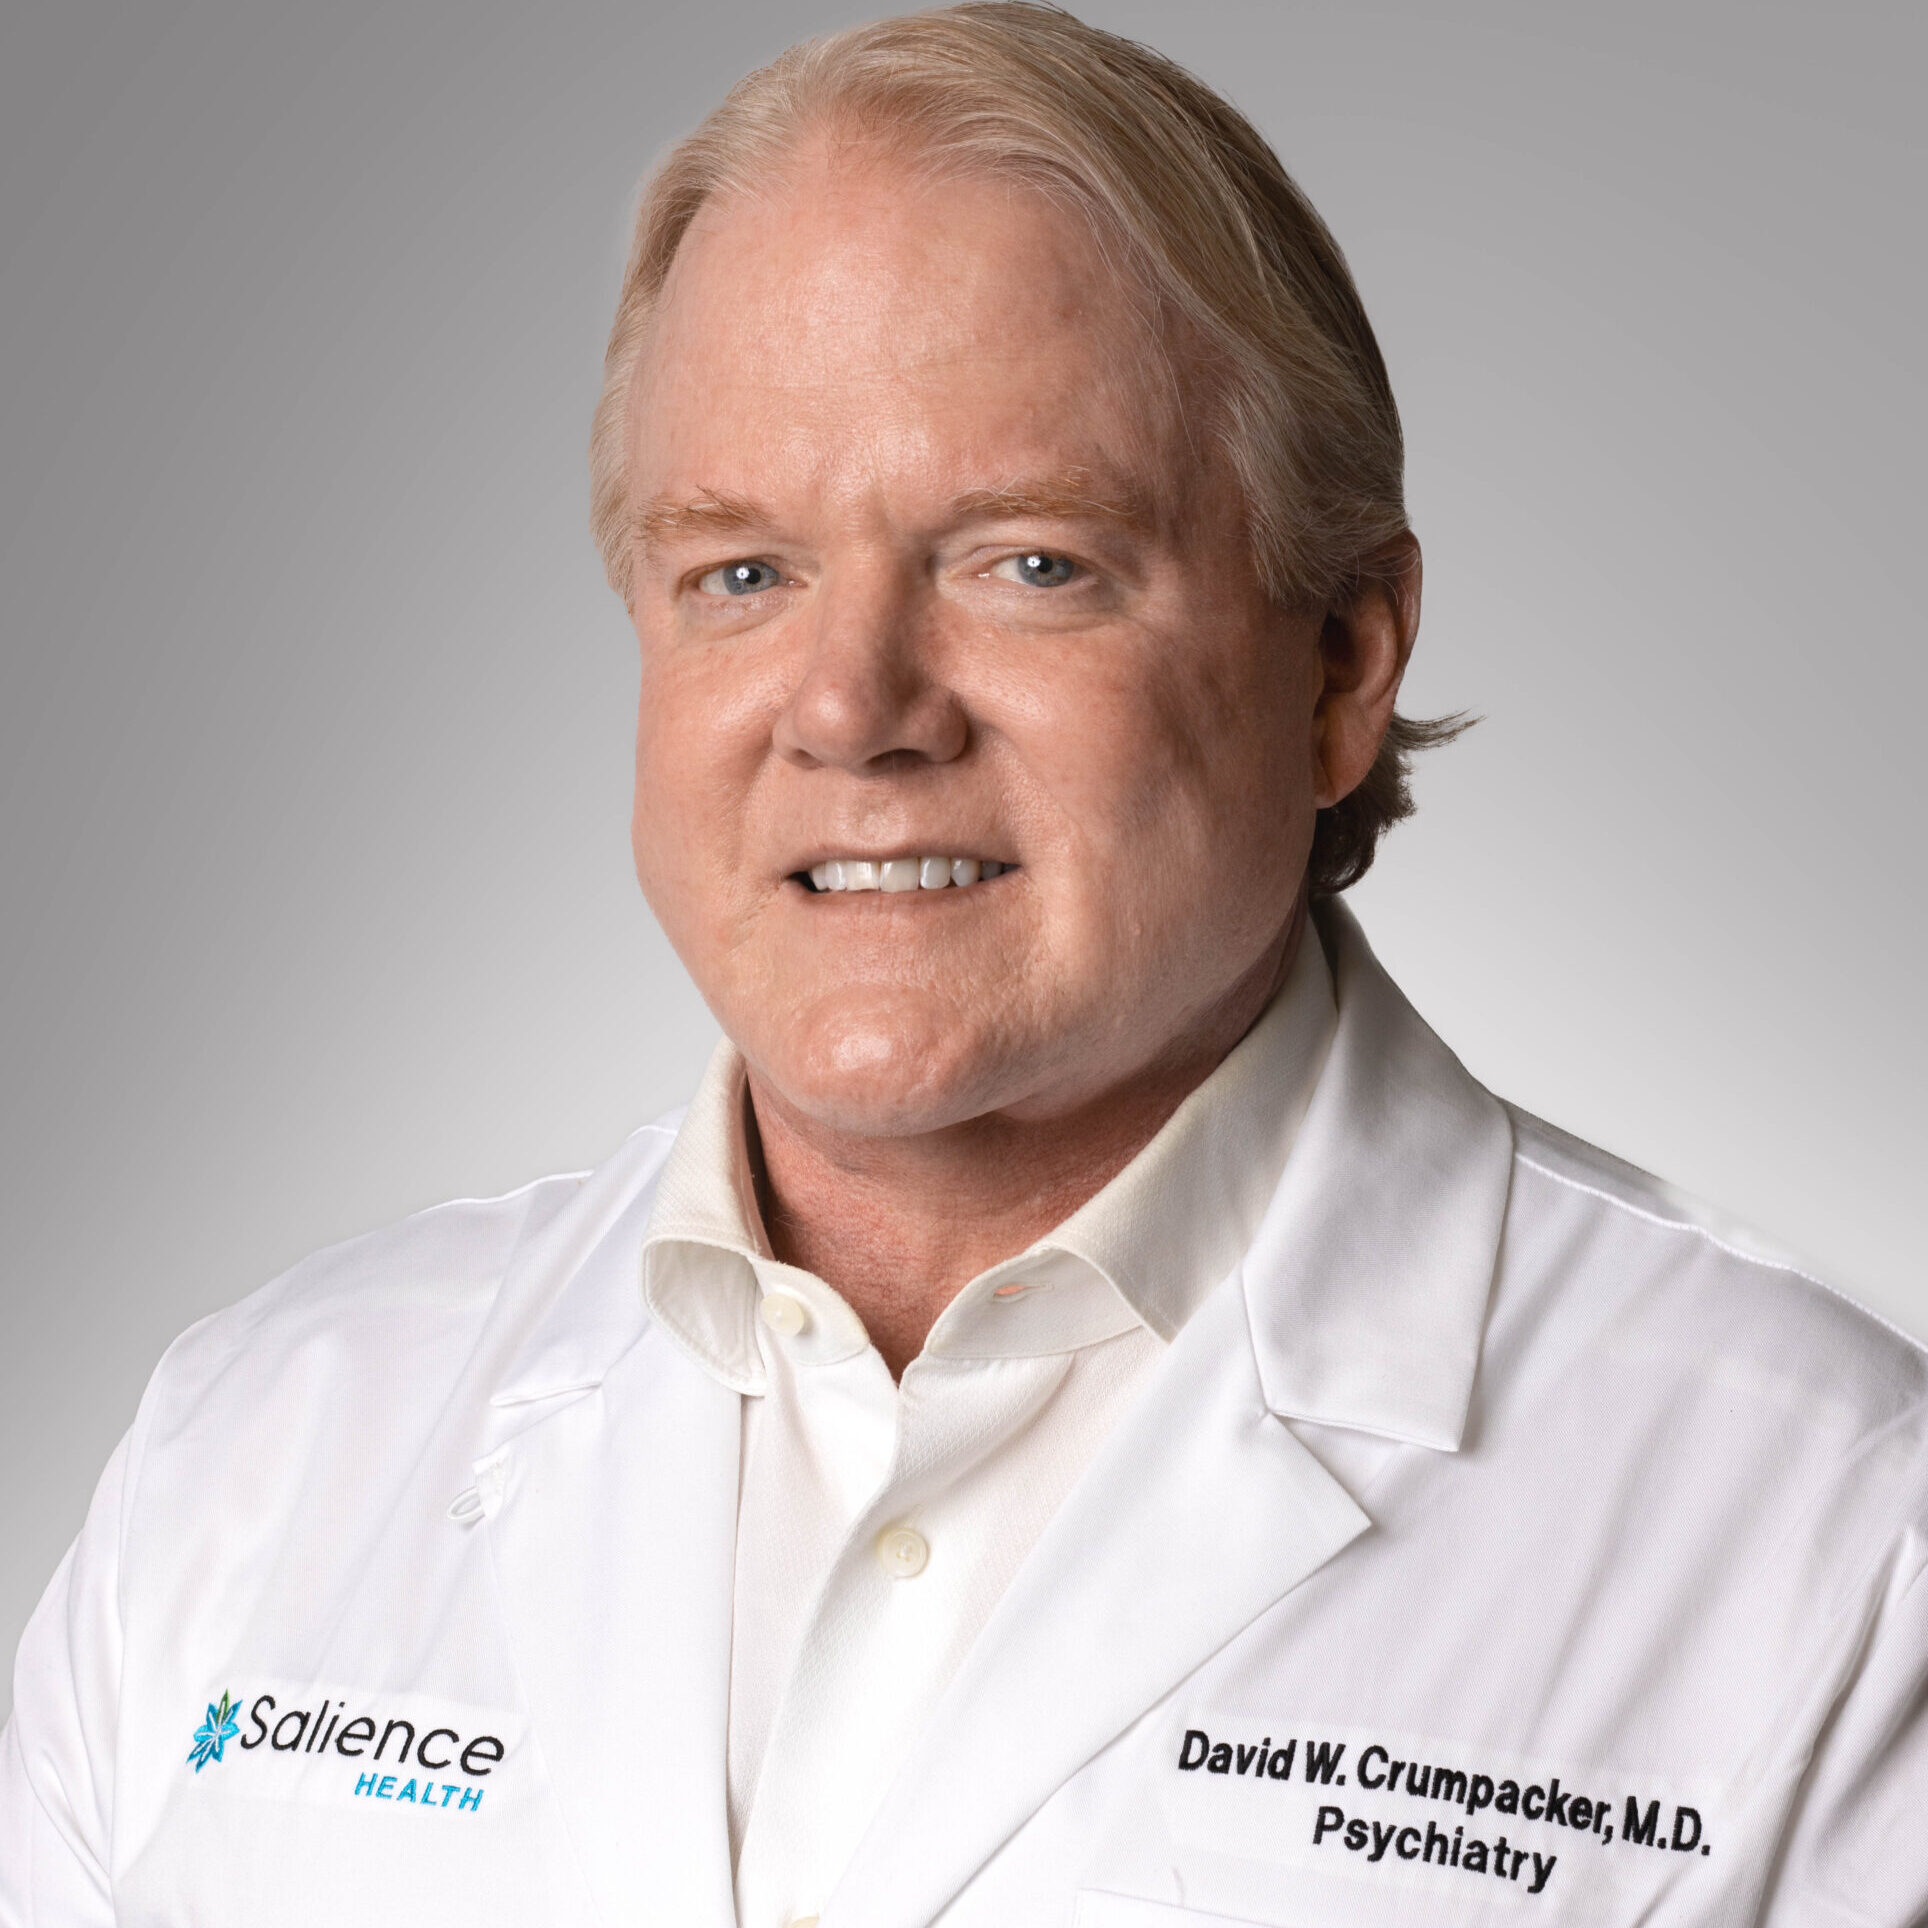 Dr. David Crumpacker, psychiatrist at Salience Health